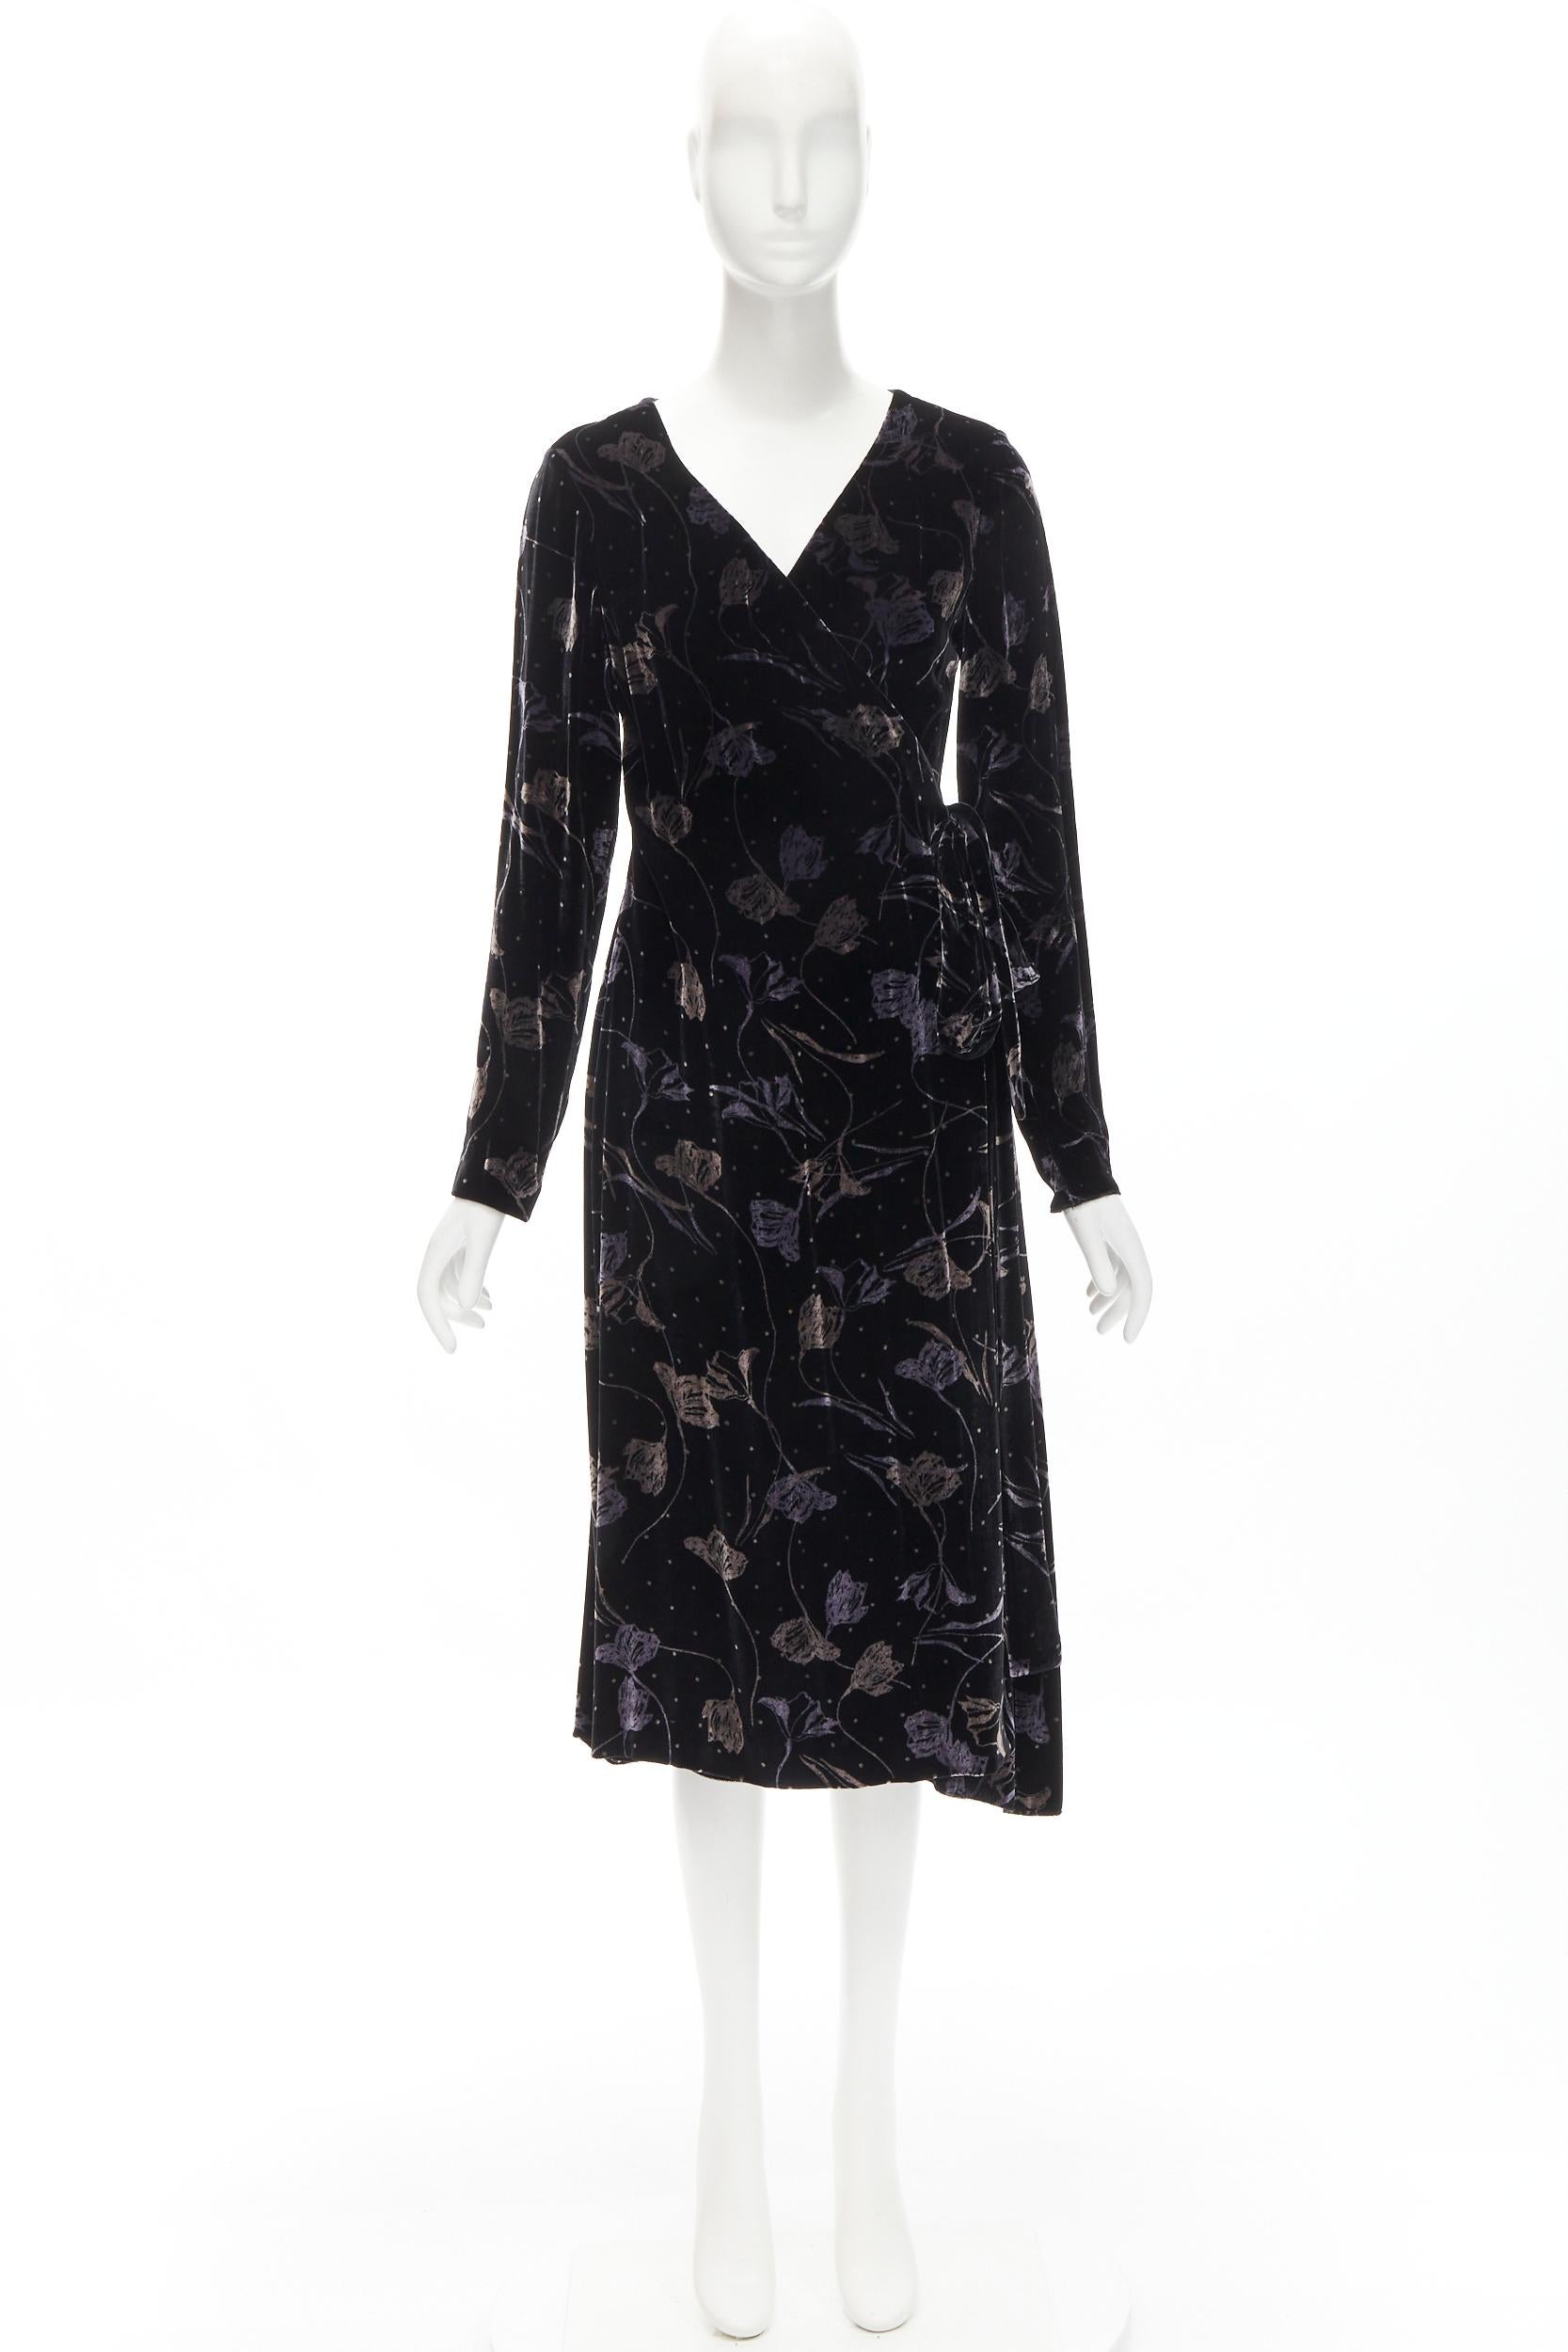 DIANE VON FUSTENBERG black floral print velvet wrap dress robe XS For Sale 2